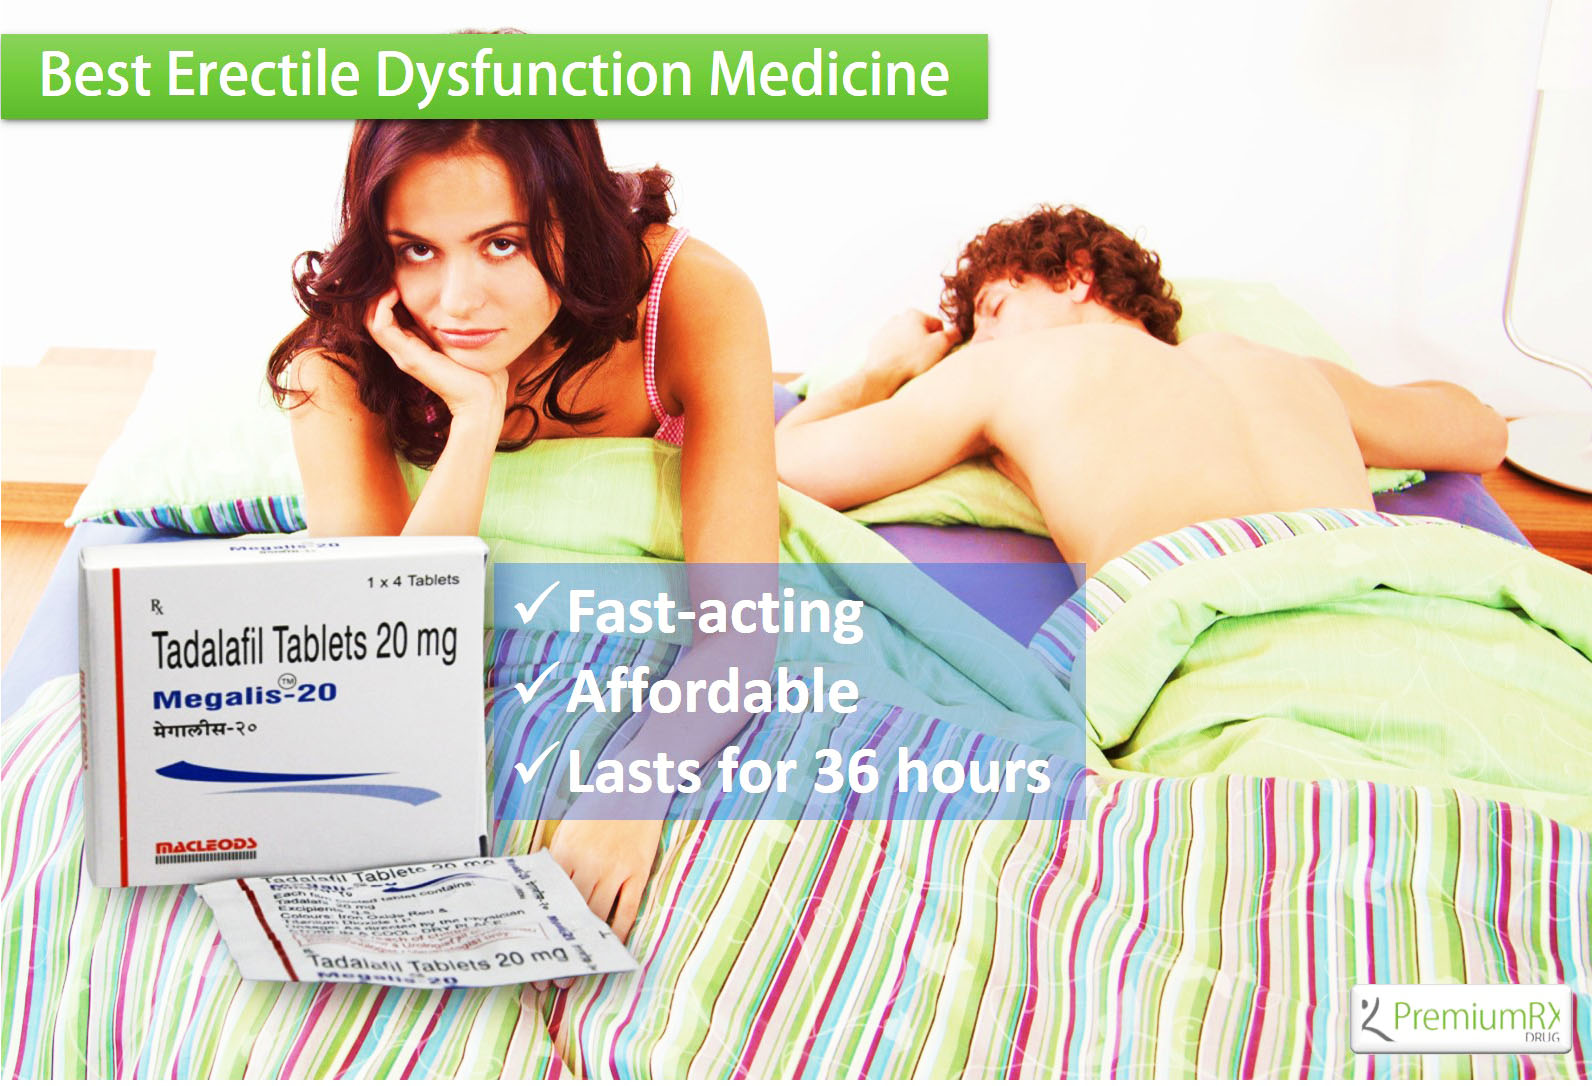 Best Erectile Dysfunction Medicine Contains Tadalafil